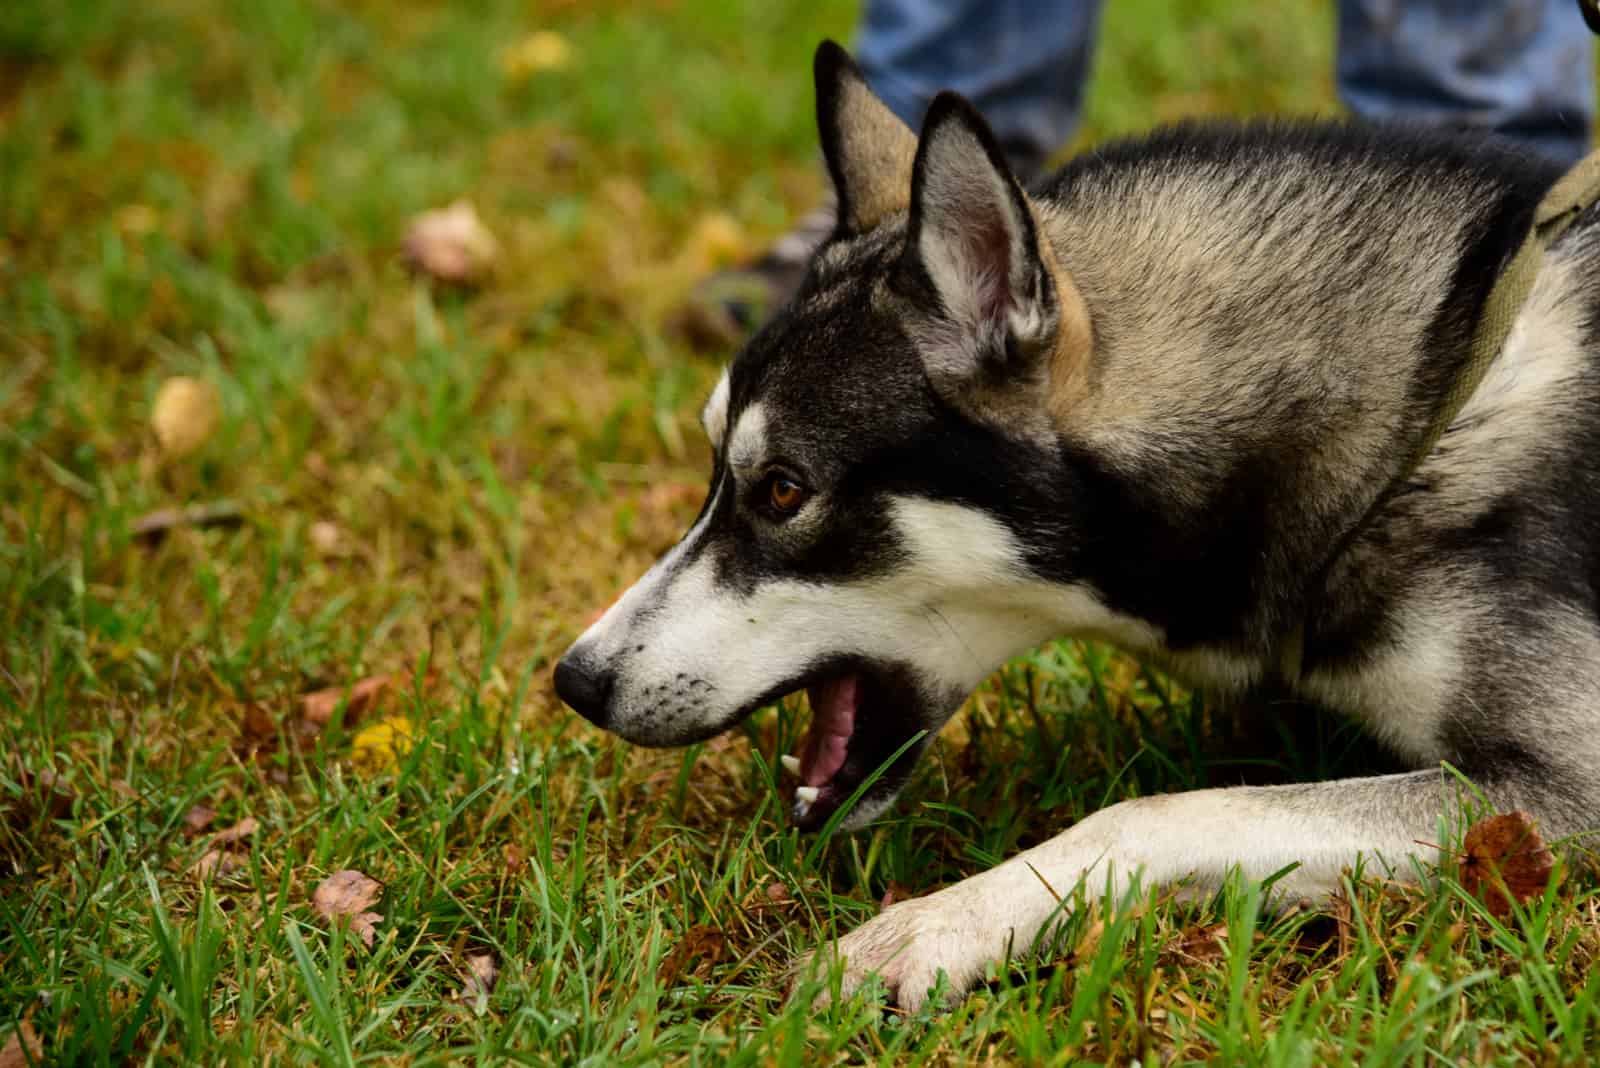 An aggressive Husky dog tries to bite